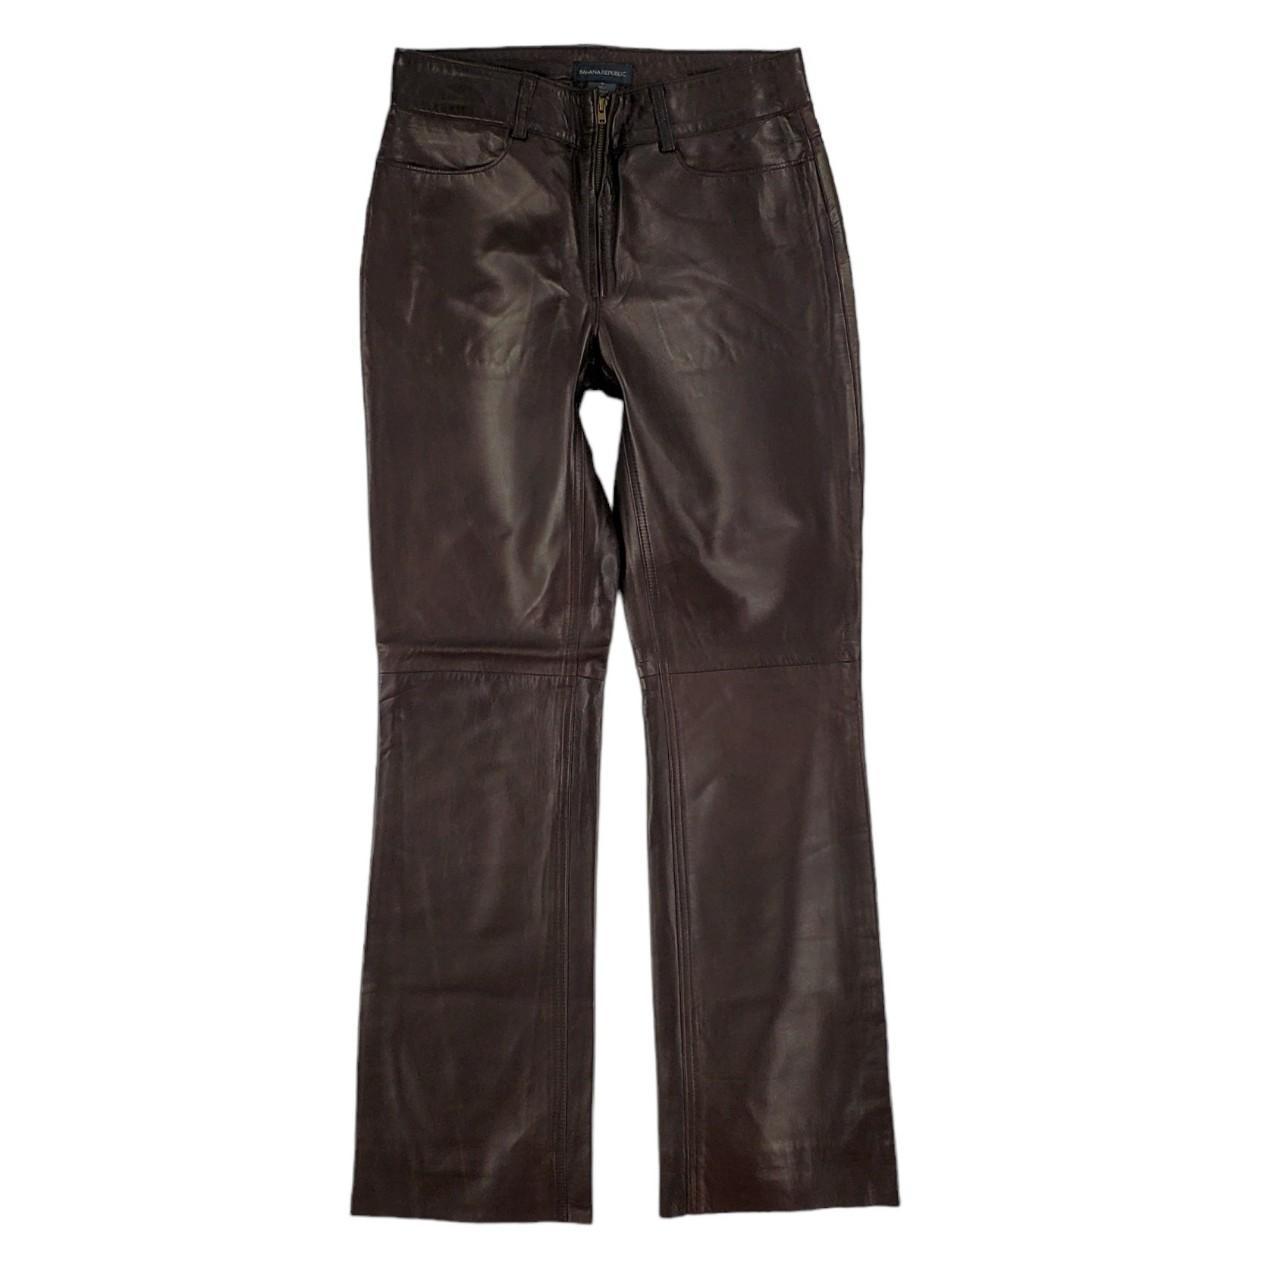 Y2K banana republic softest leather pants…perfect rise/boot cut